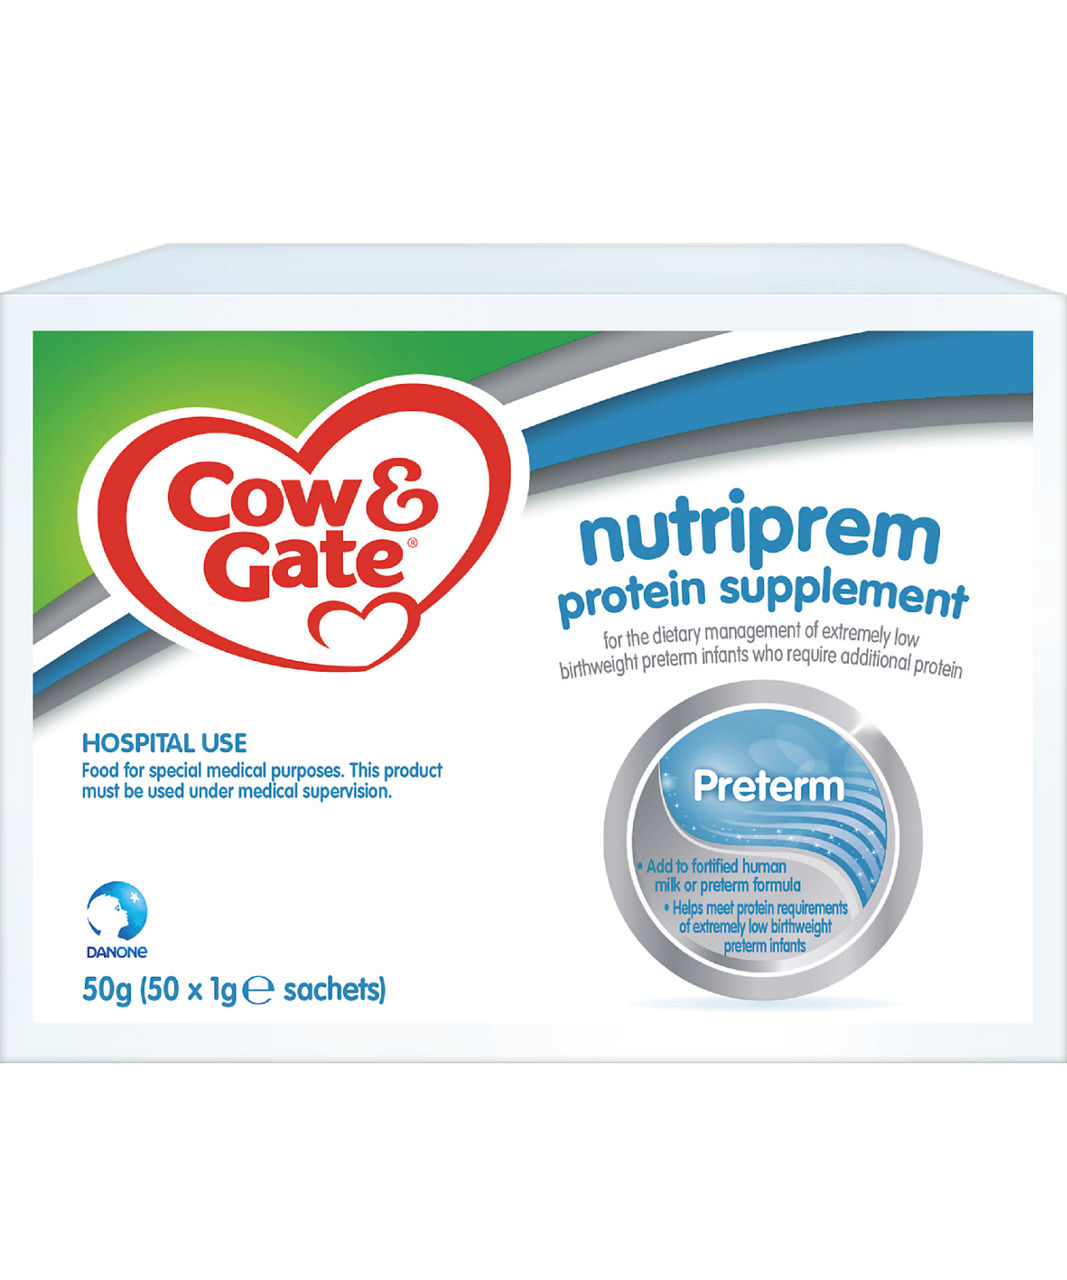 Cow & Gate nutriprem protein supplement 1g sachets